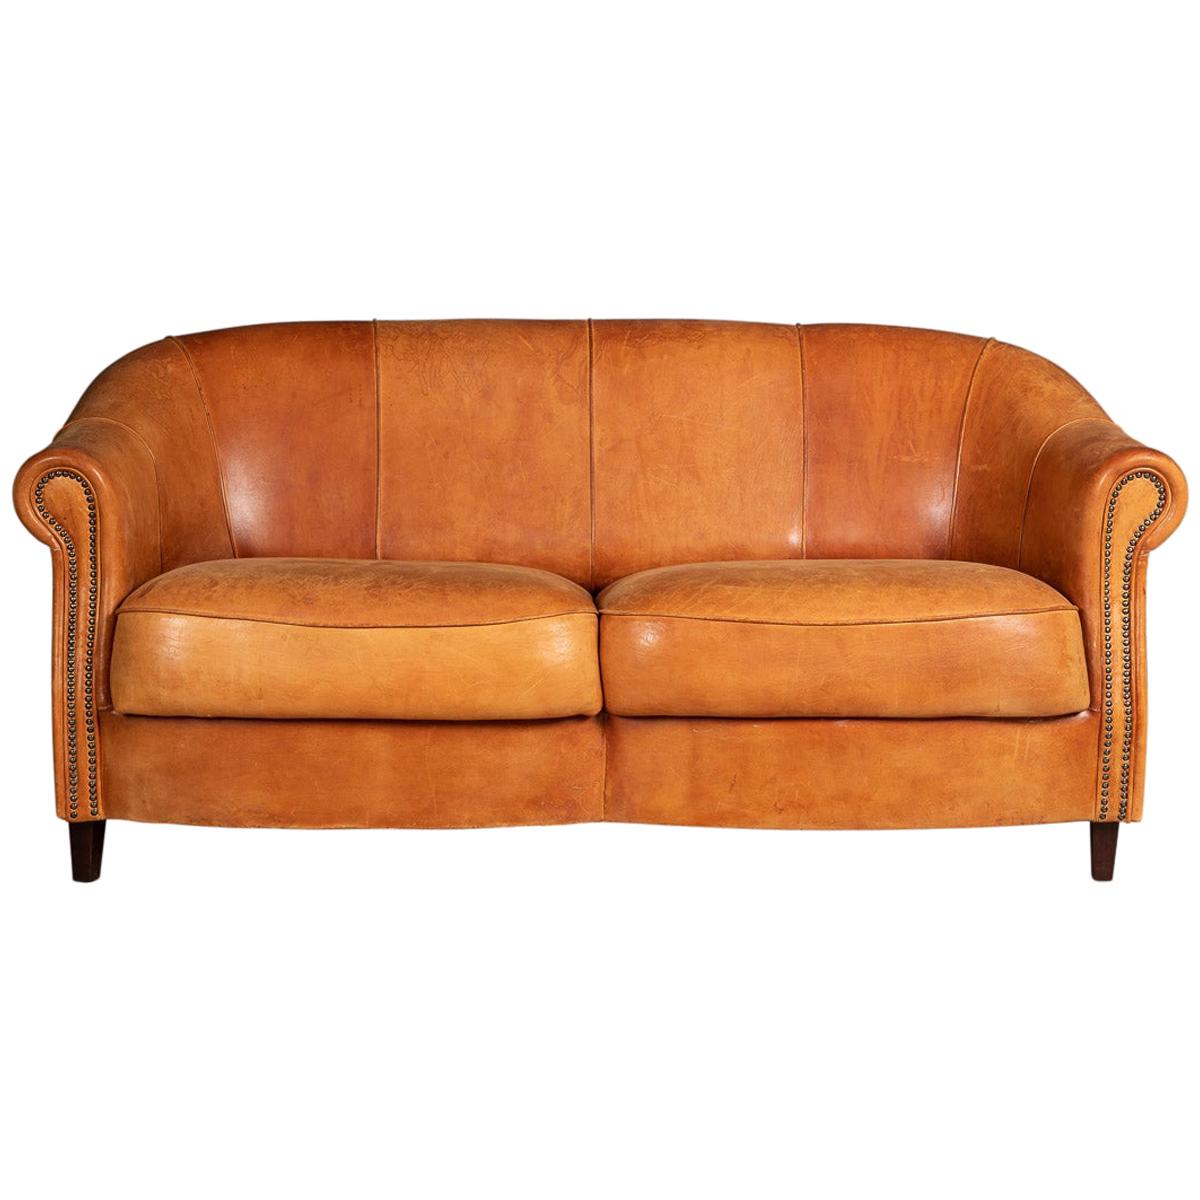 Late 20th Century Dutch Three-Seat Sheepskin Leather Sofa For Sale